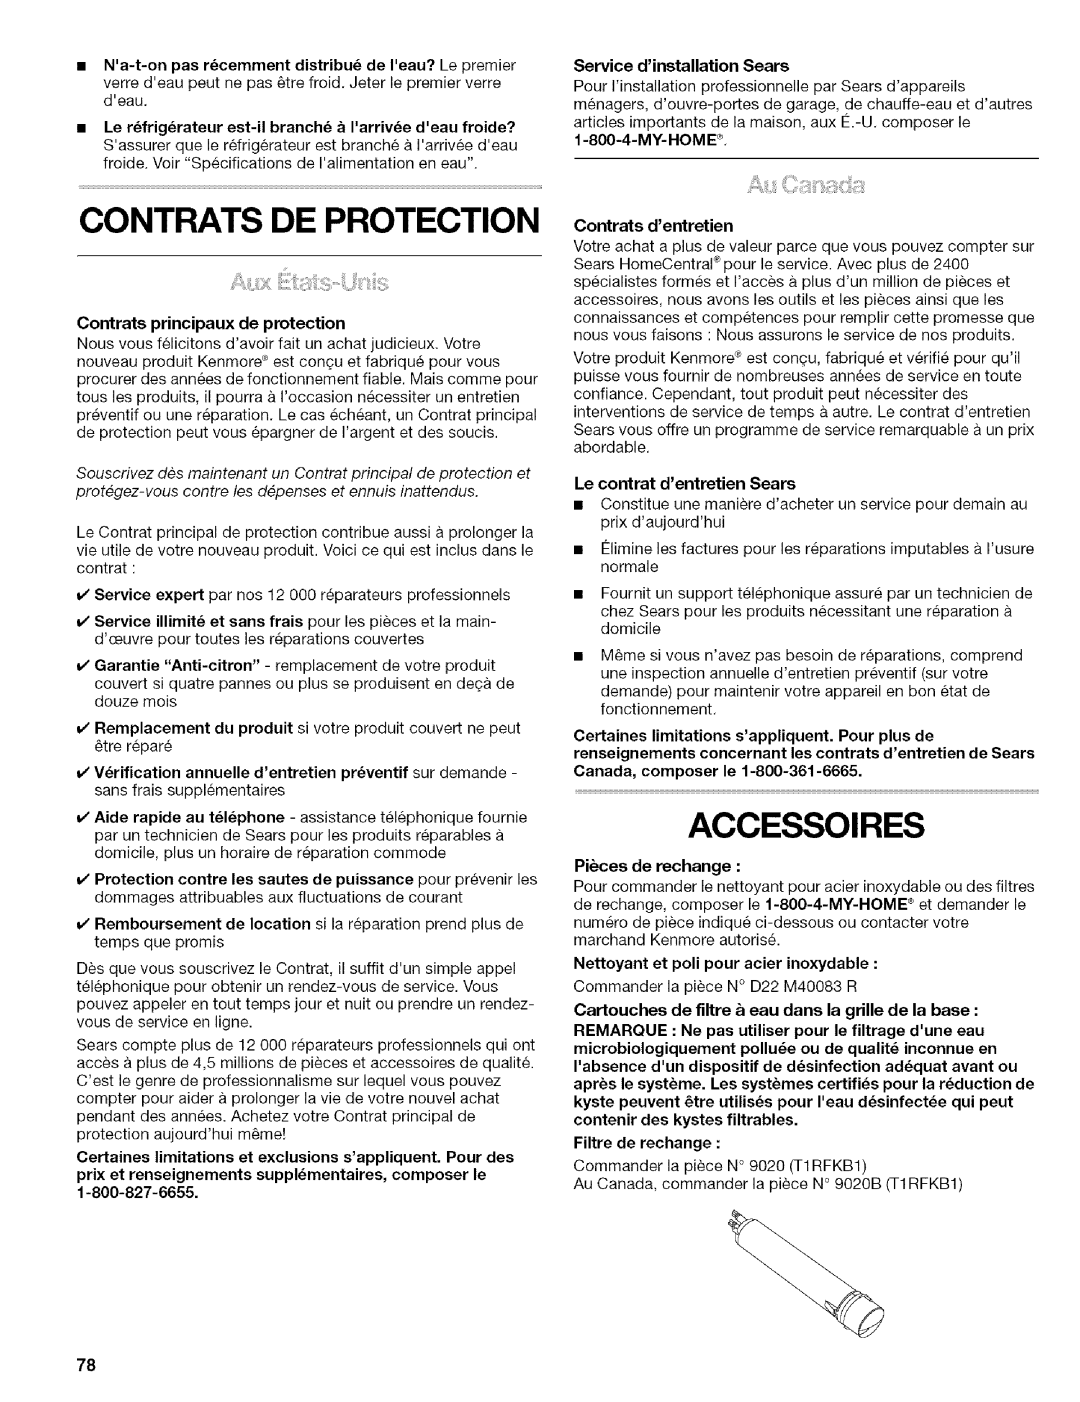 Kenmore 10656719500 Contrats De Protection, Accessoires, Contrats principaux de protection, Service dinstallation Sears 